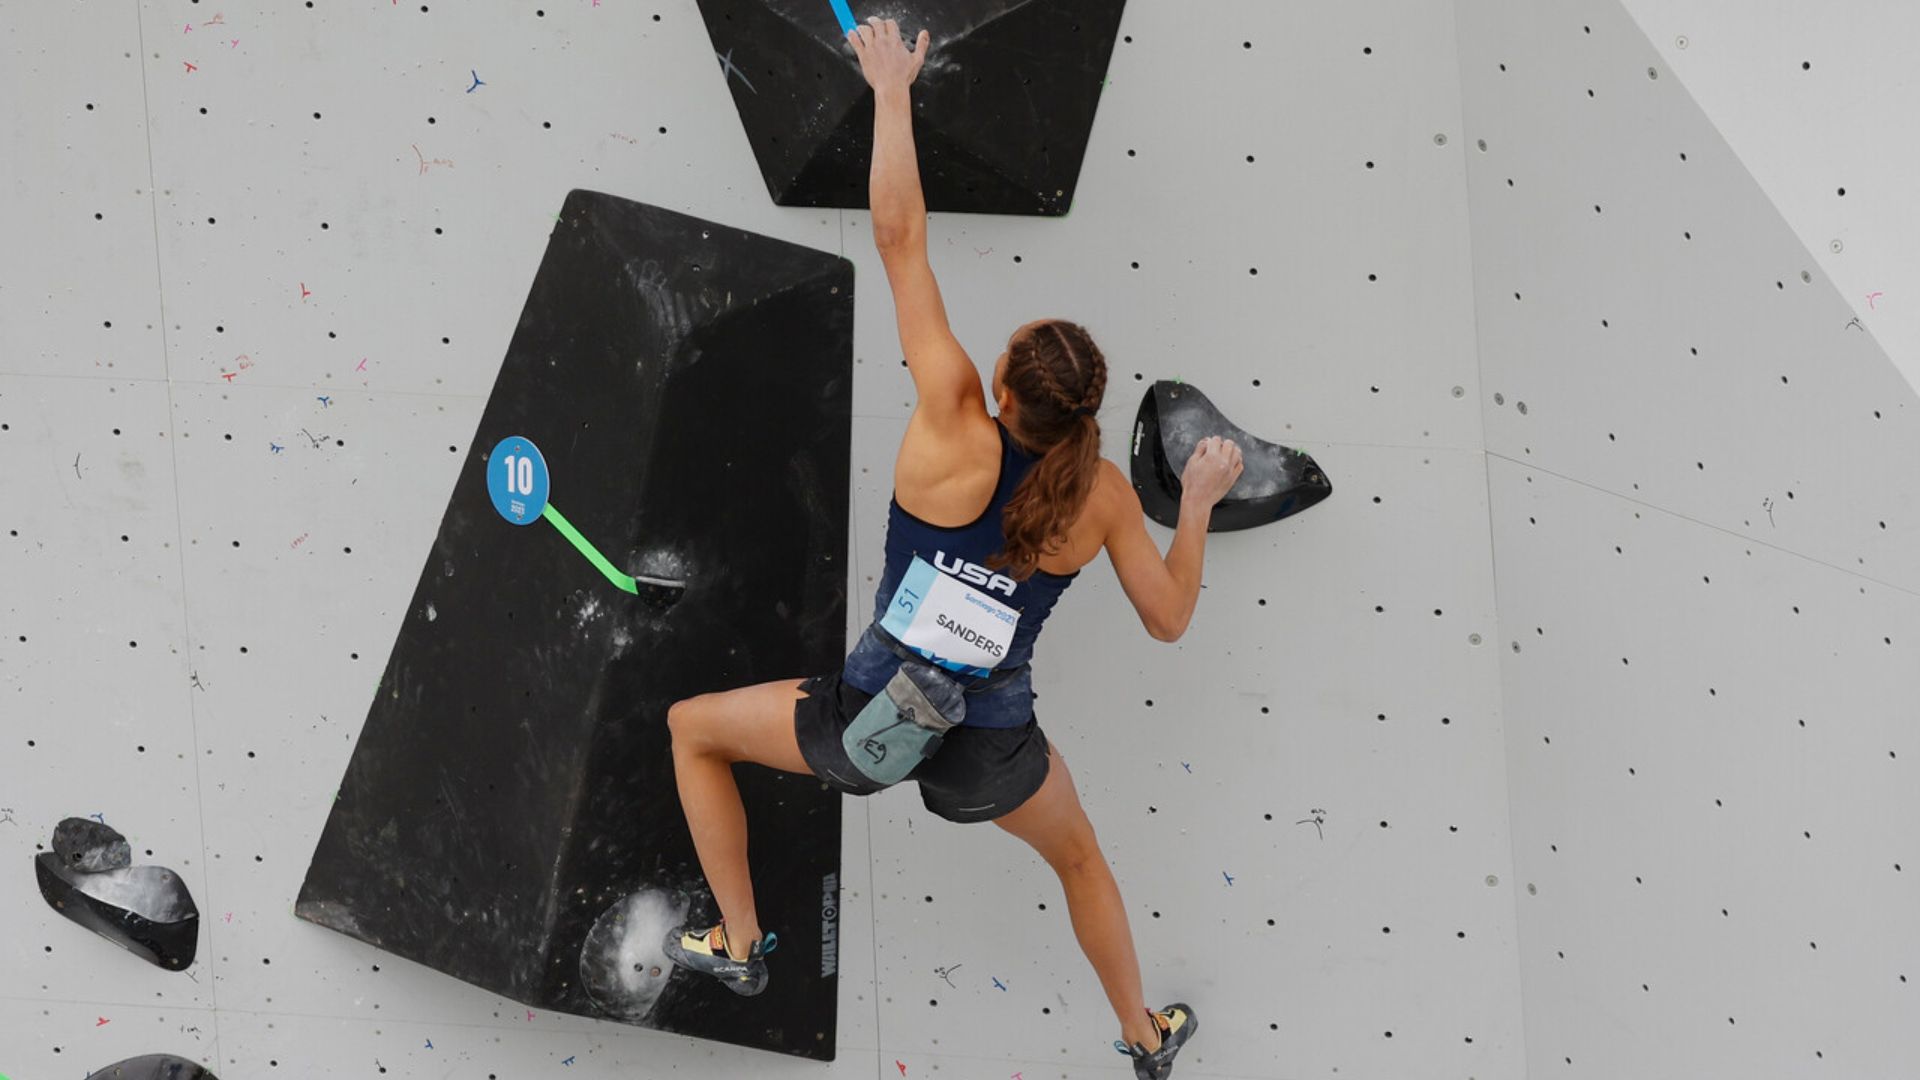 United States also Dominates Women's Climbing